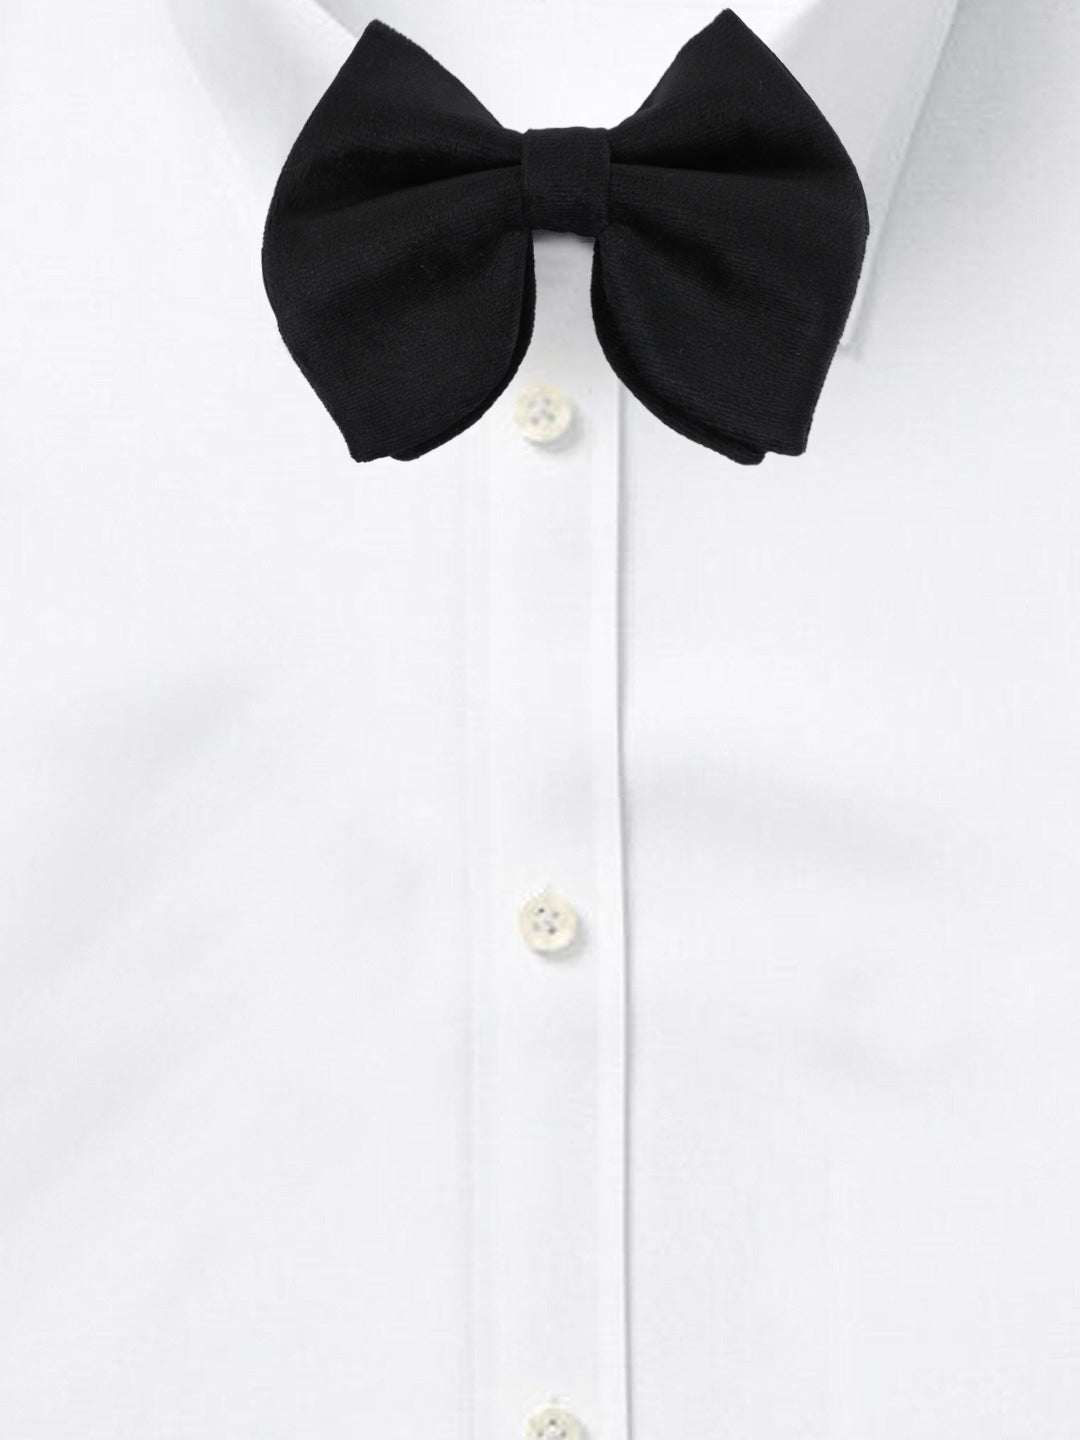 Alvaro Castagnino Men's Black Colored Butterfly Type Bow Tie